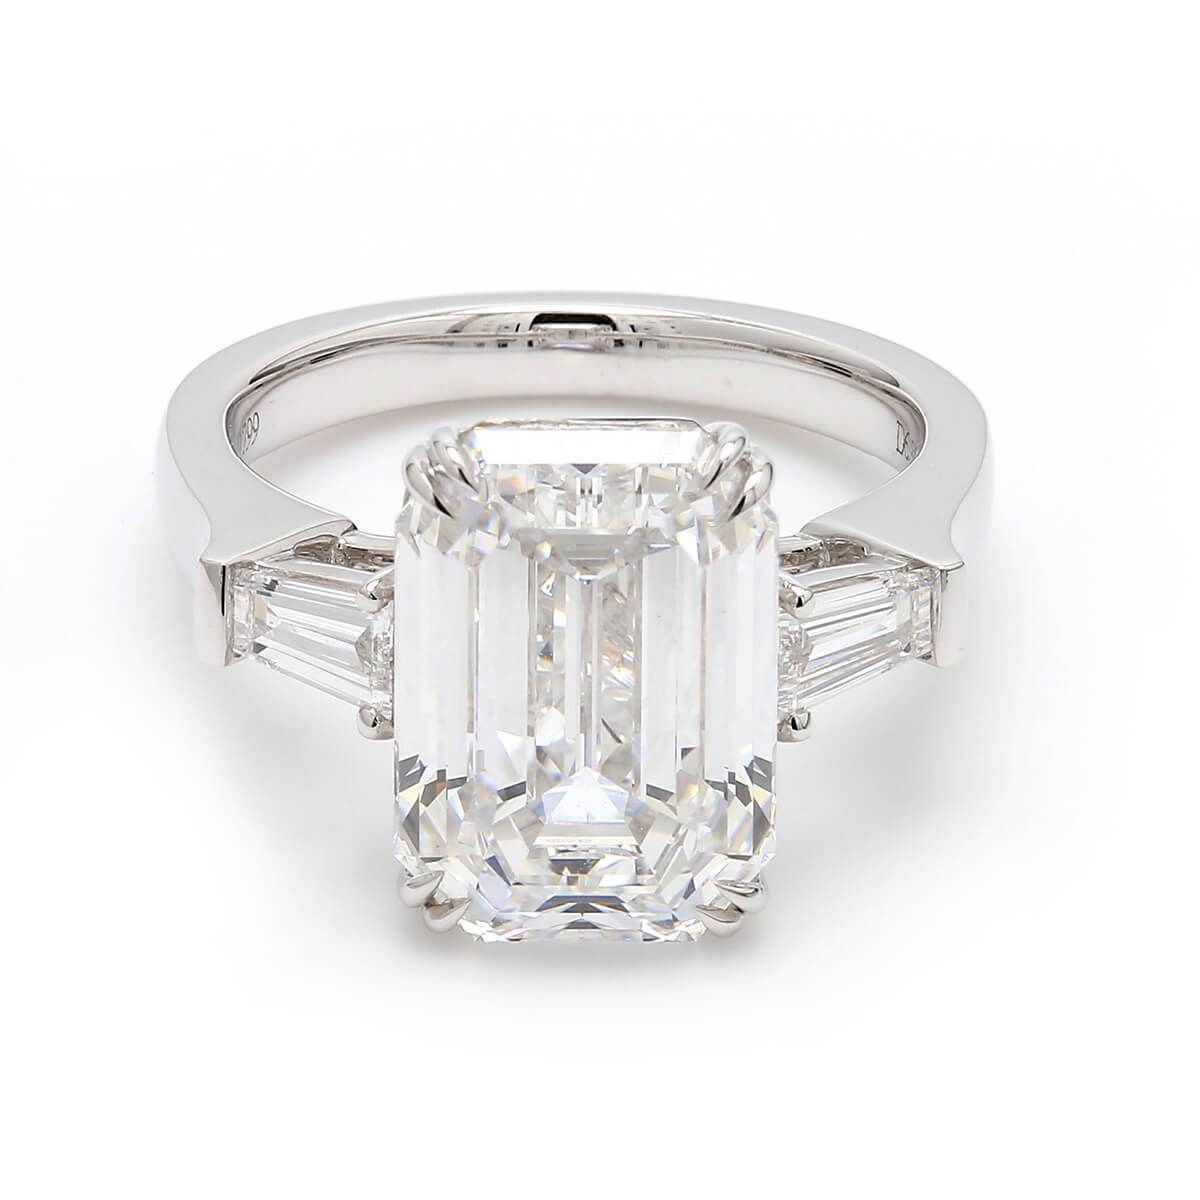 White Diamond Ring, 6.78 Ct. TW, Emerald shape, GIA Certified, 2155170379